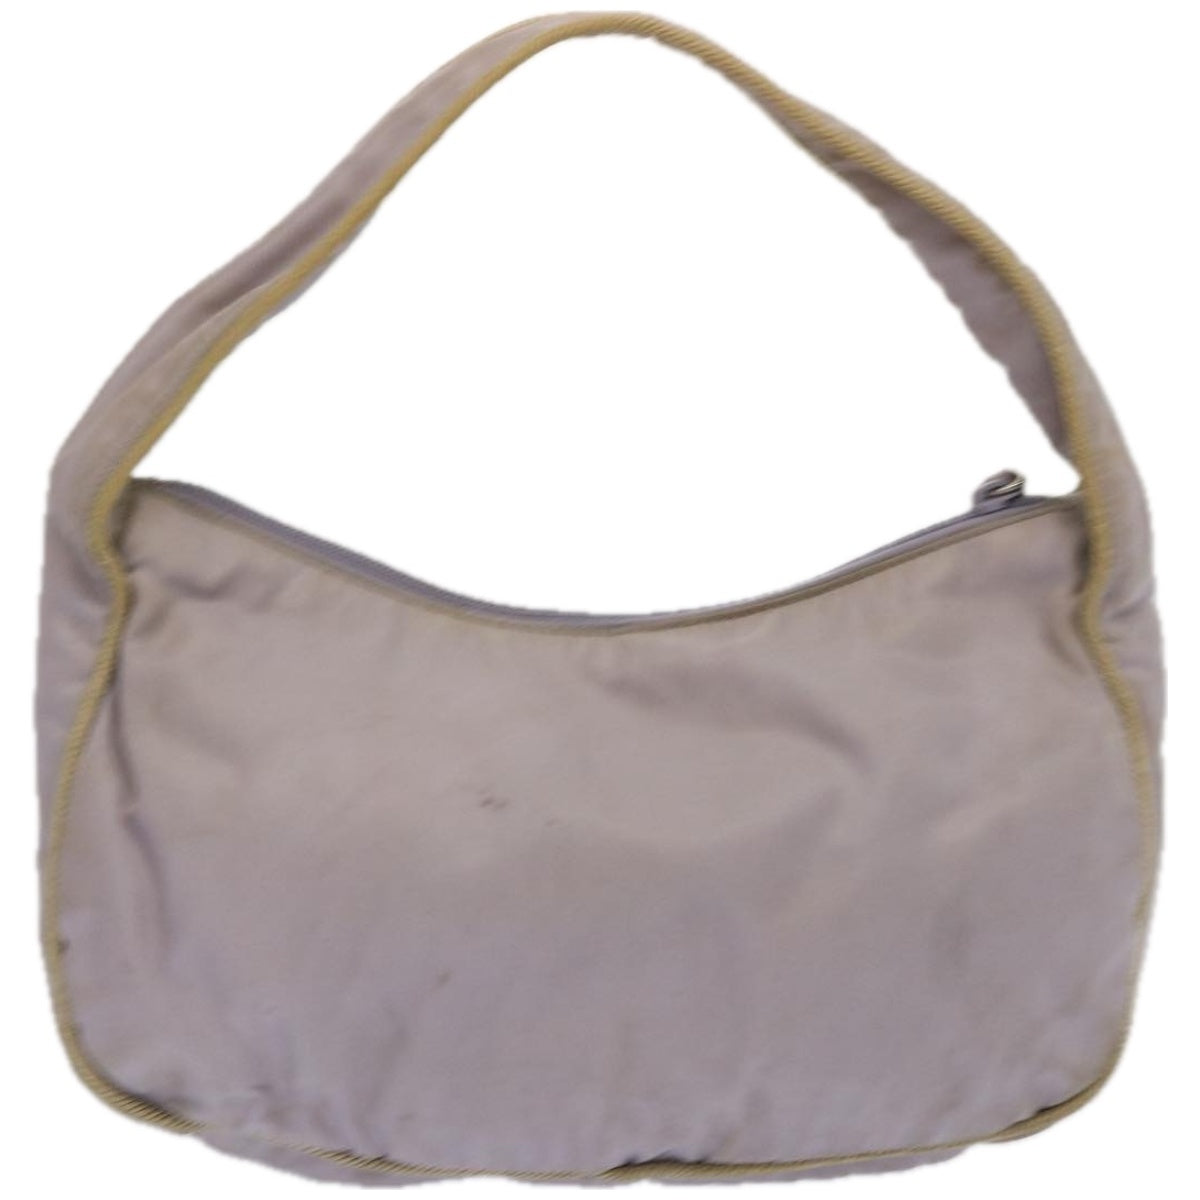 PRADA Hand Bag Nylon Purple Auth 67321